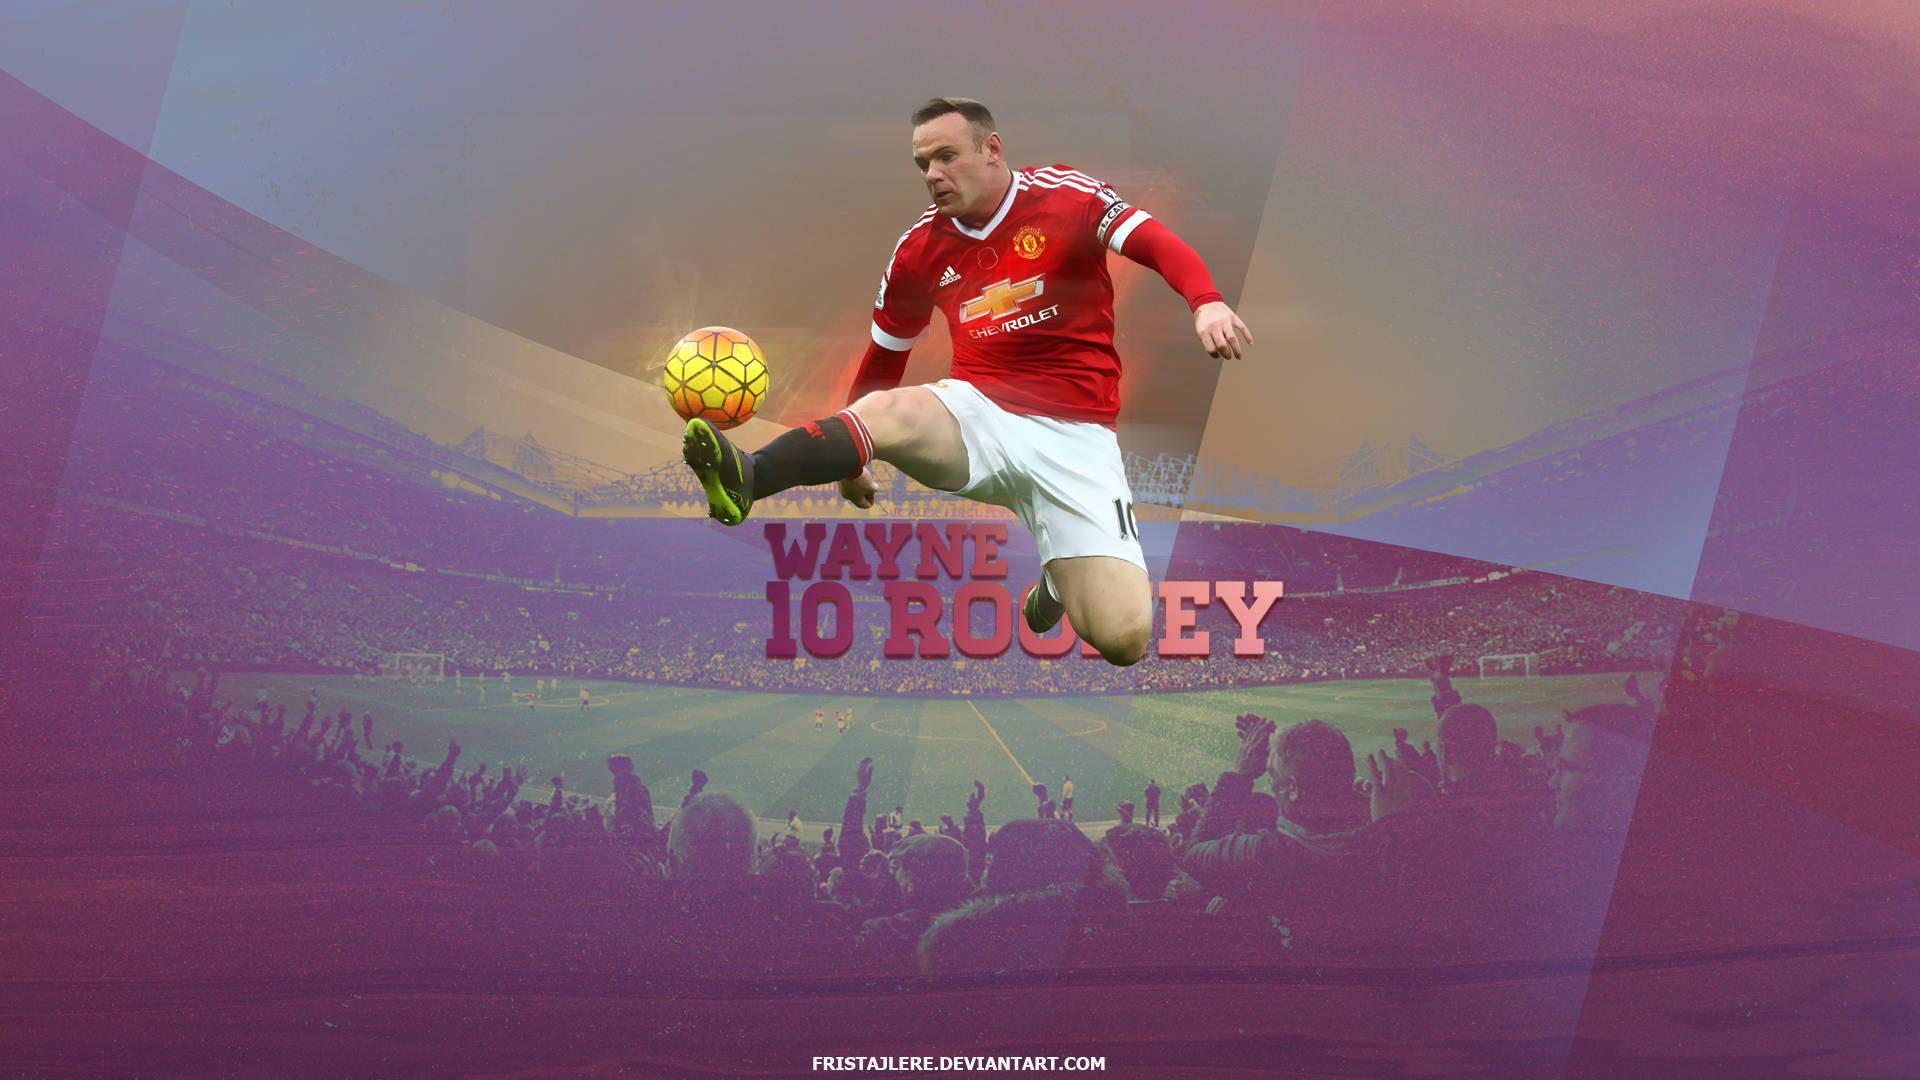 Wayne Rooney Flying Ball Kick Background